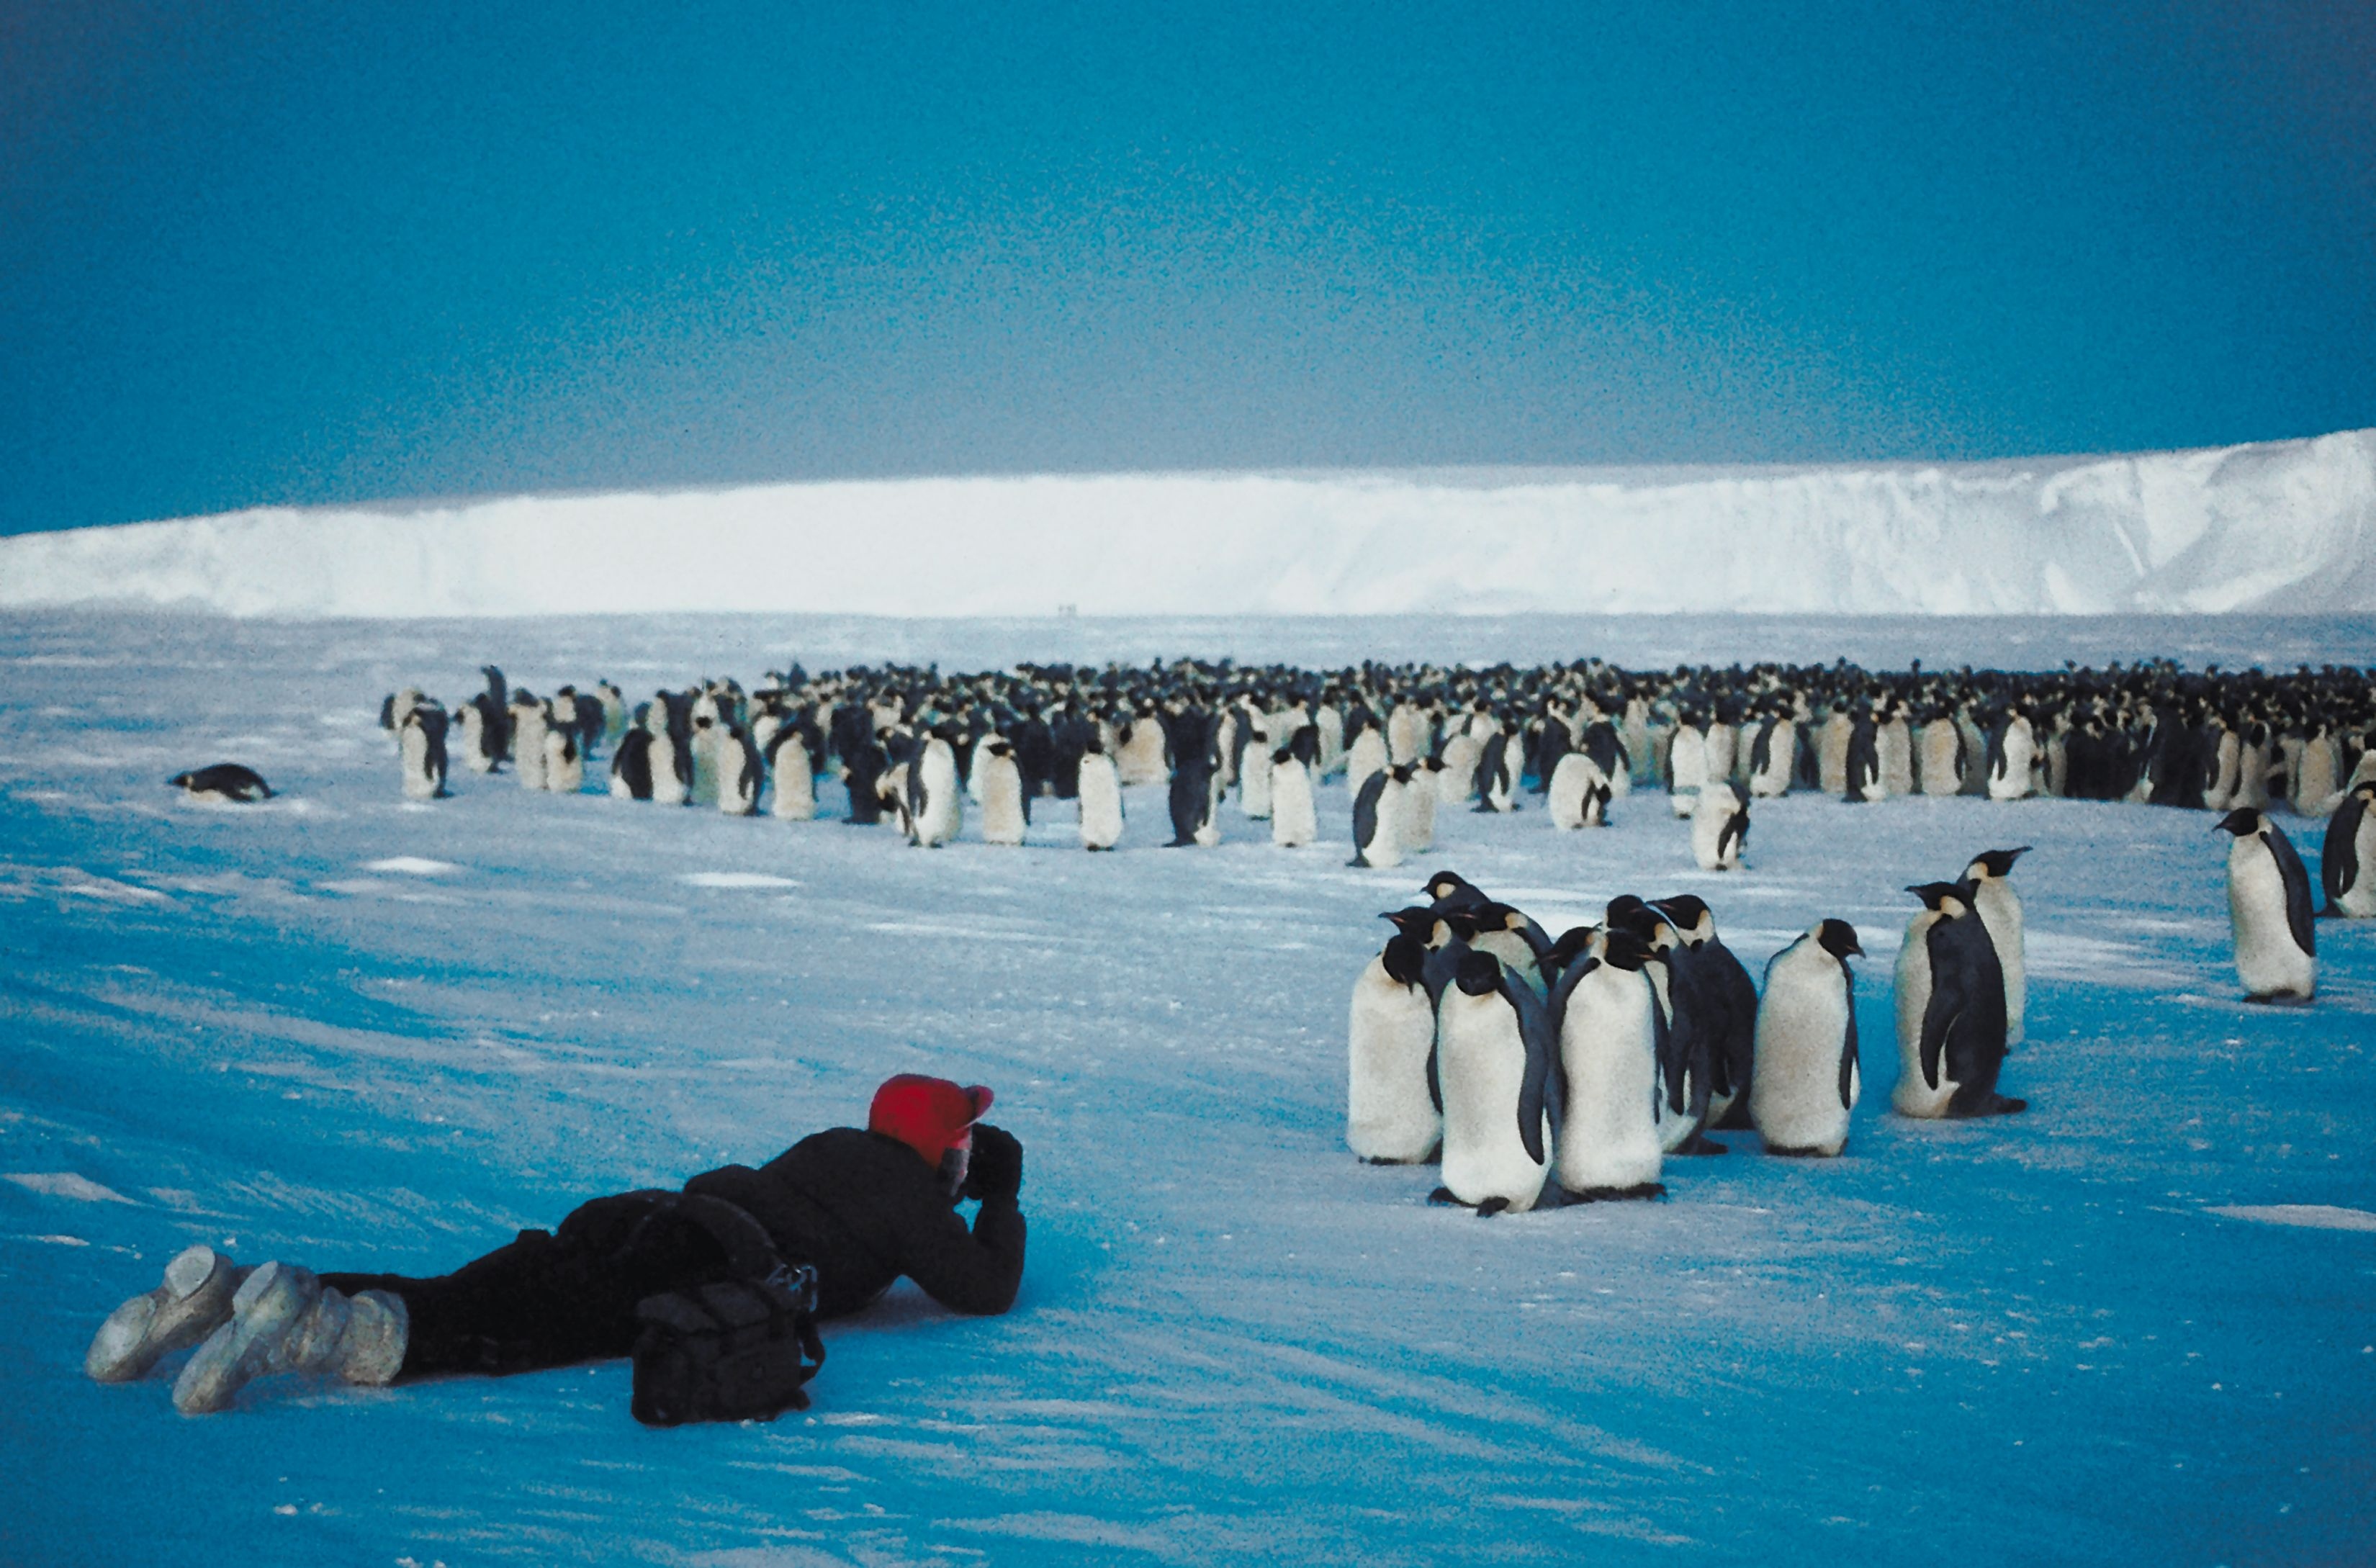 Antarctica is a photographer's dream